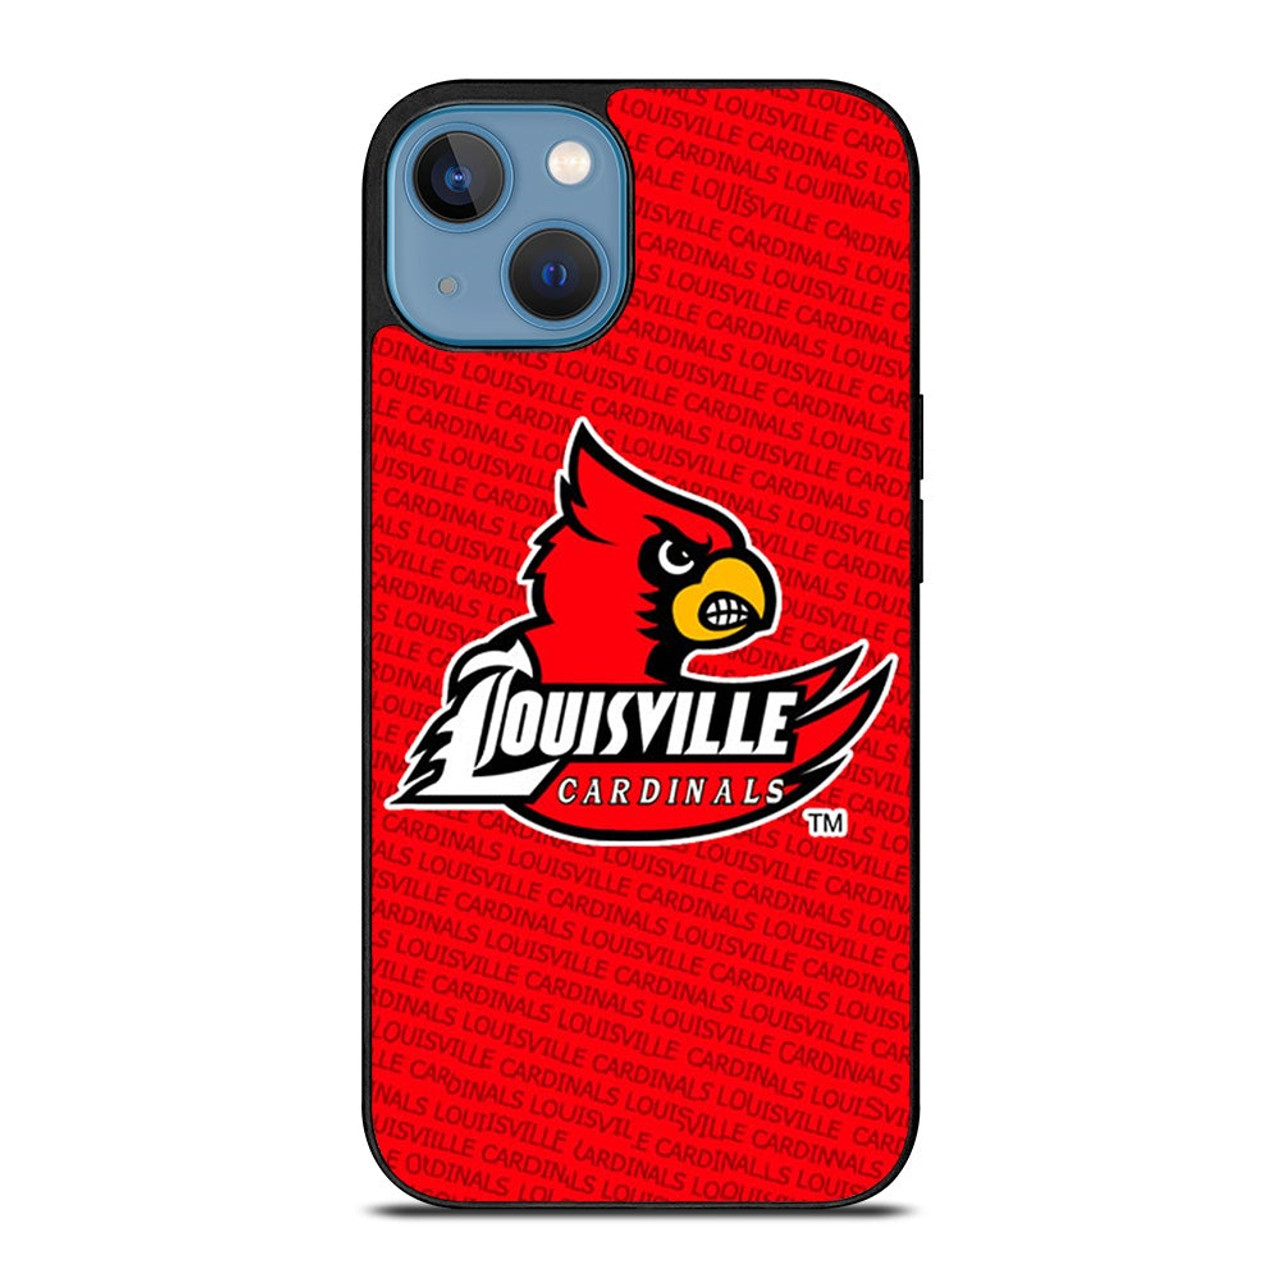 louisville cardinals iphone case